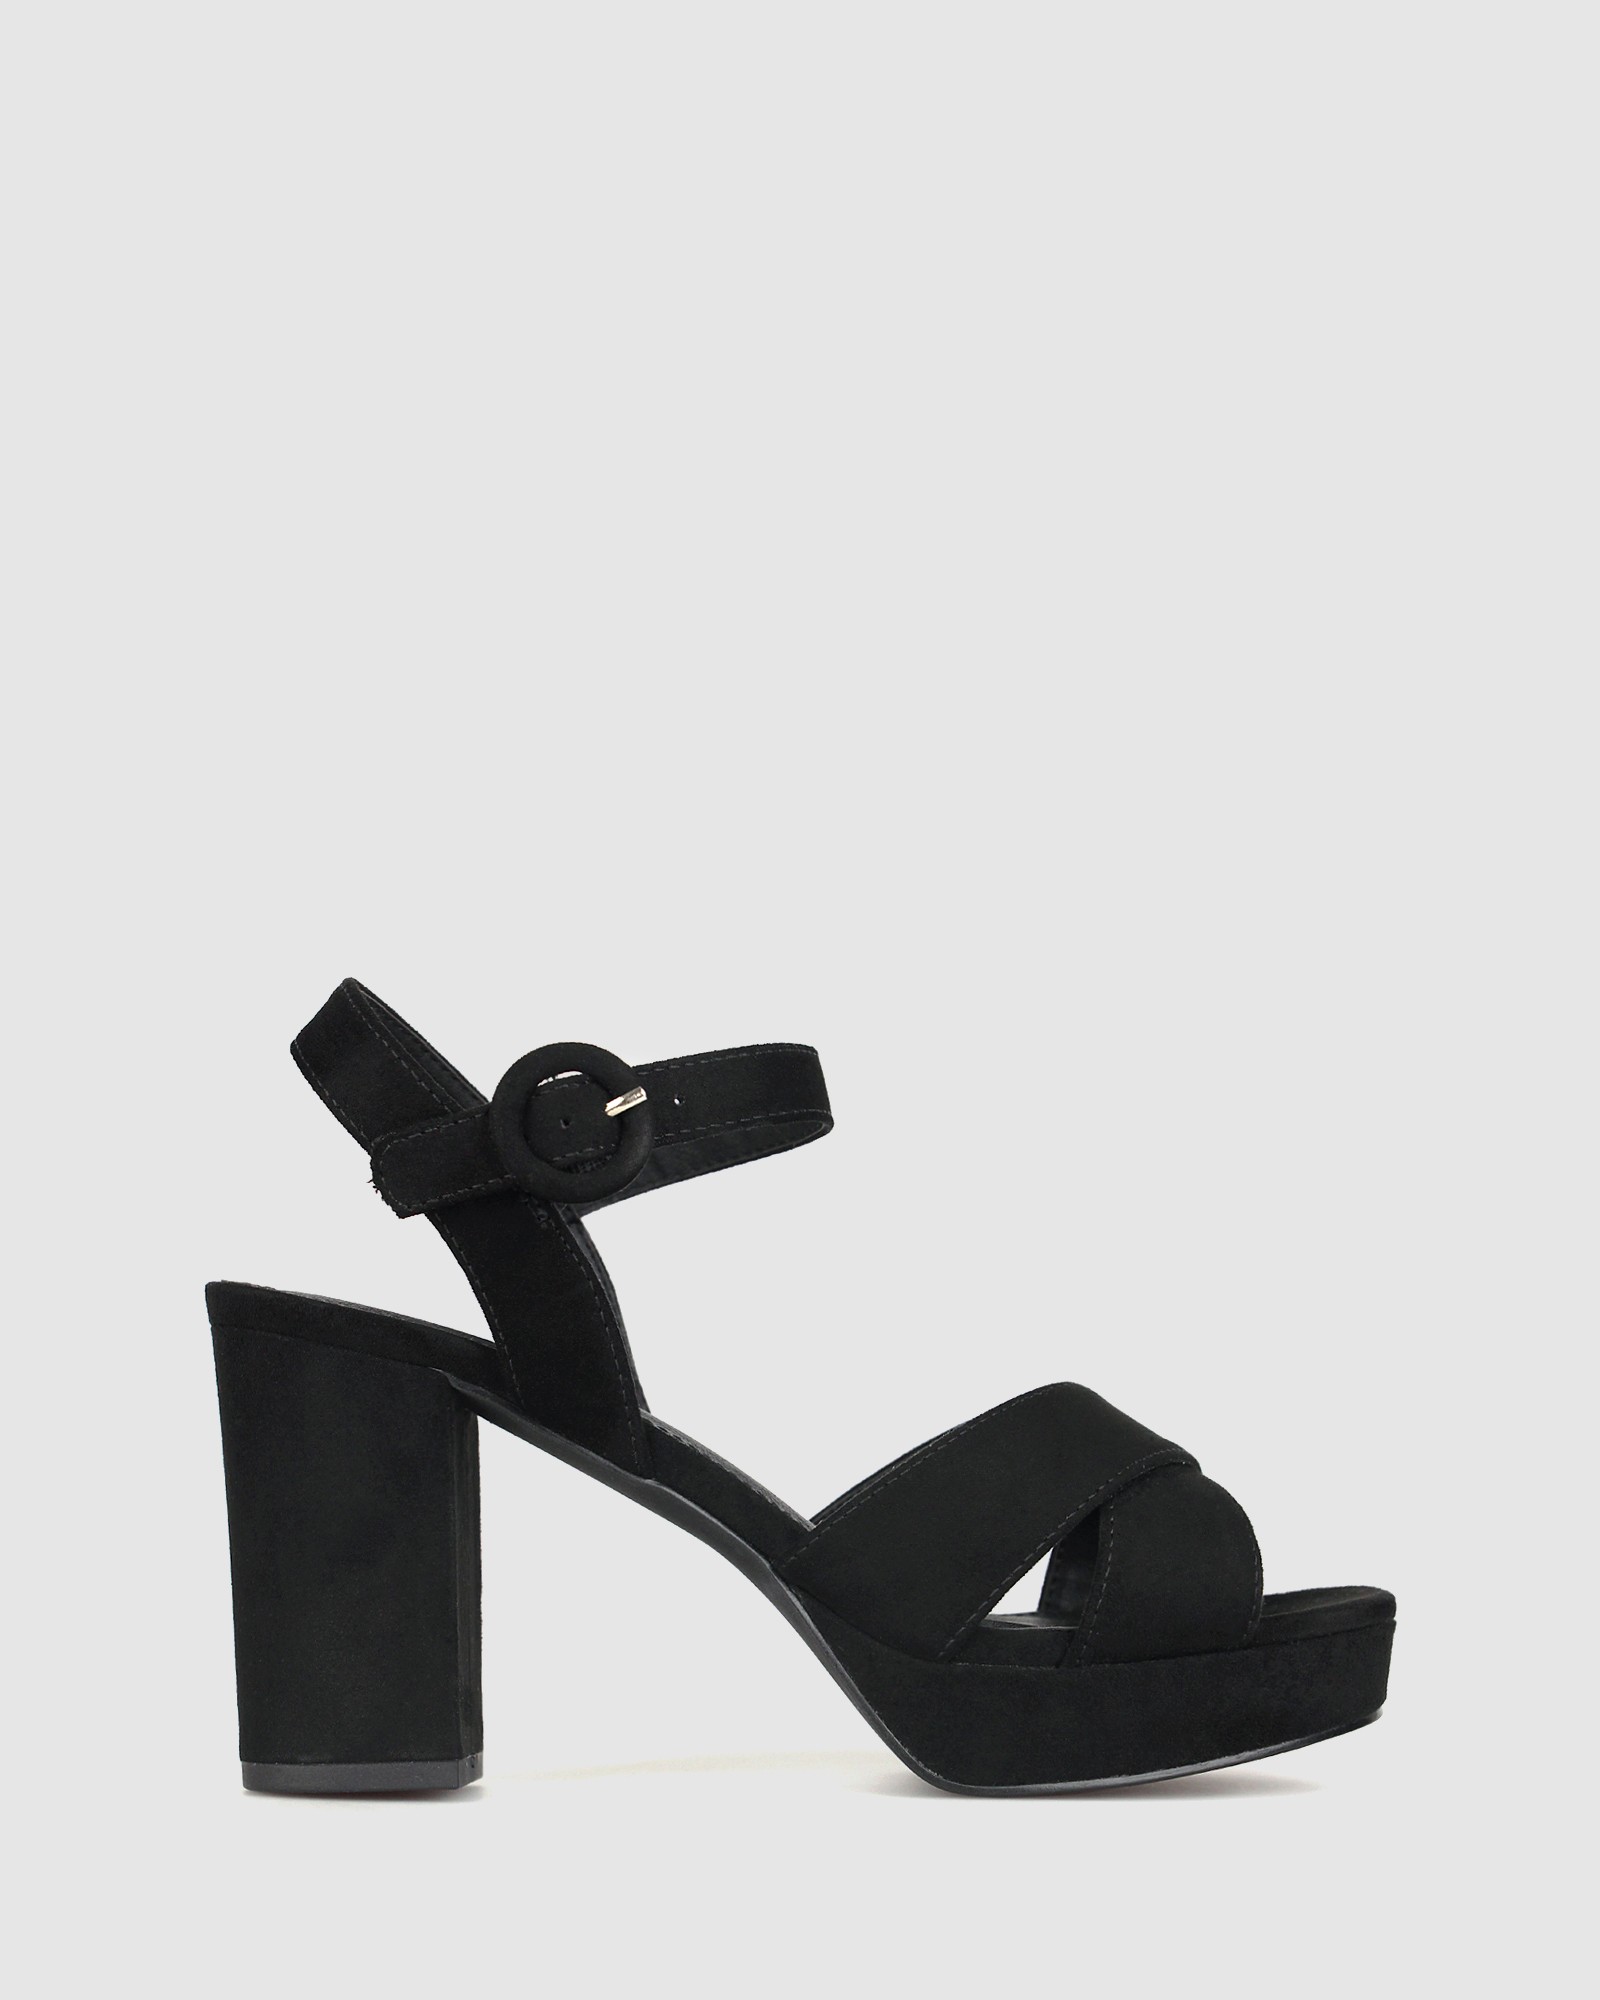 Bronte Platform Sandals Black Micro by Betts | ShoeSales